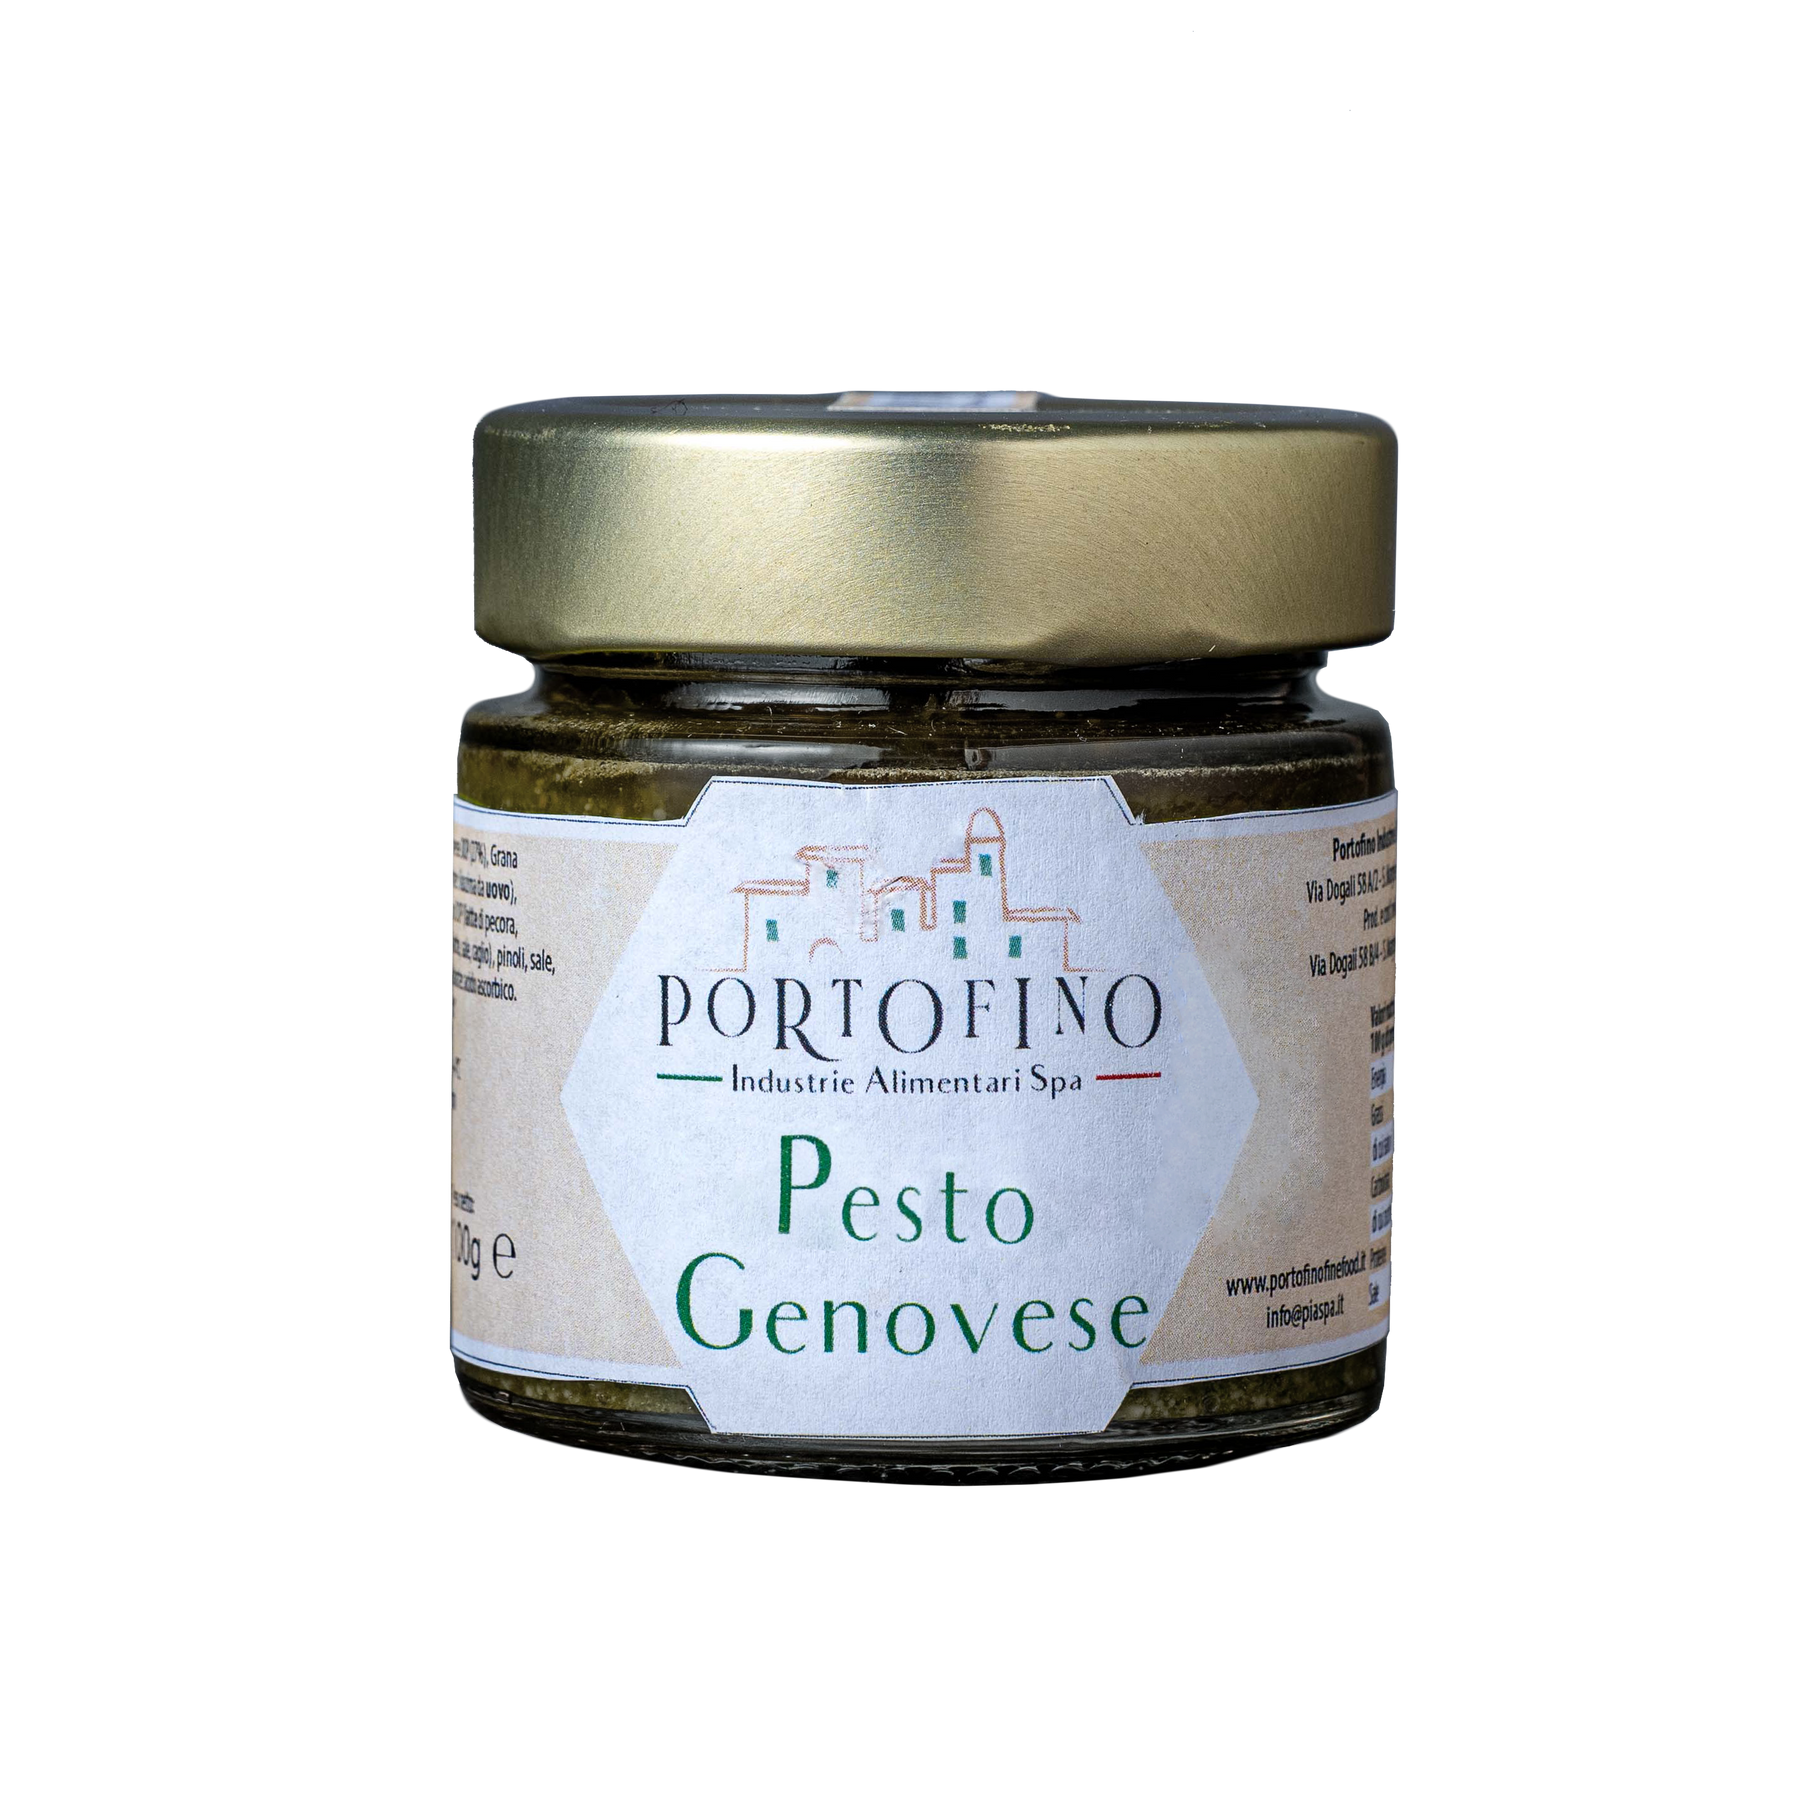 The Genoese Pesto